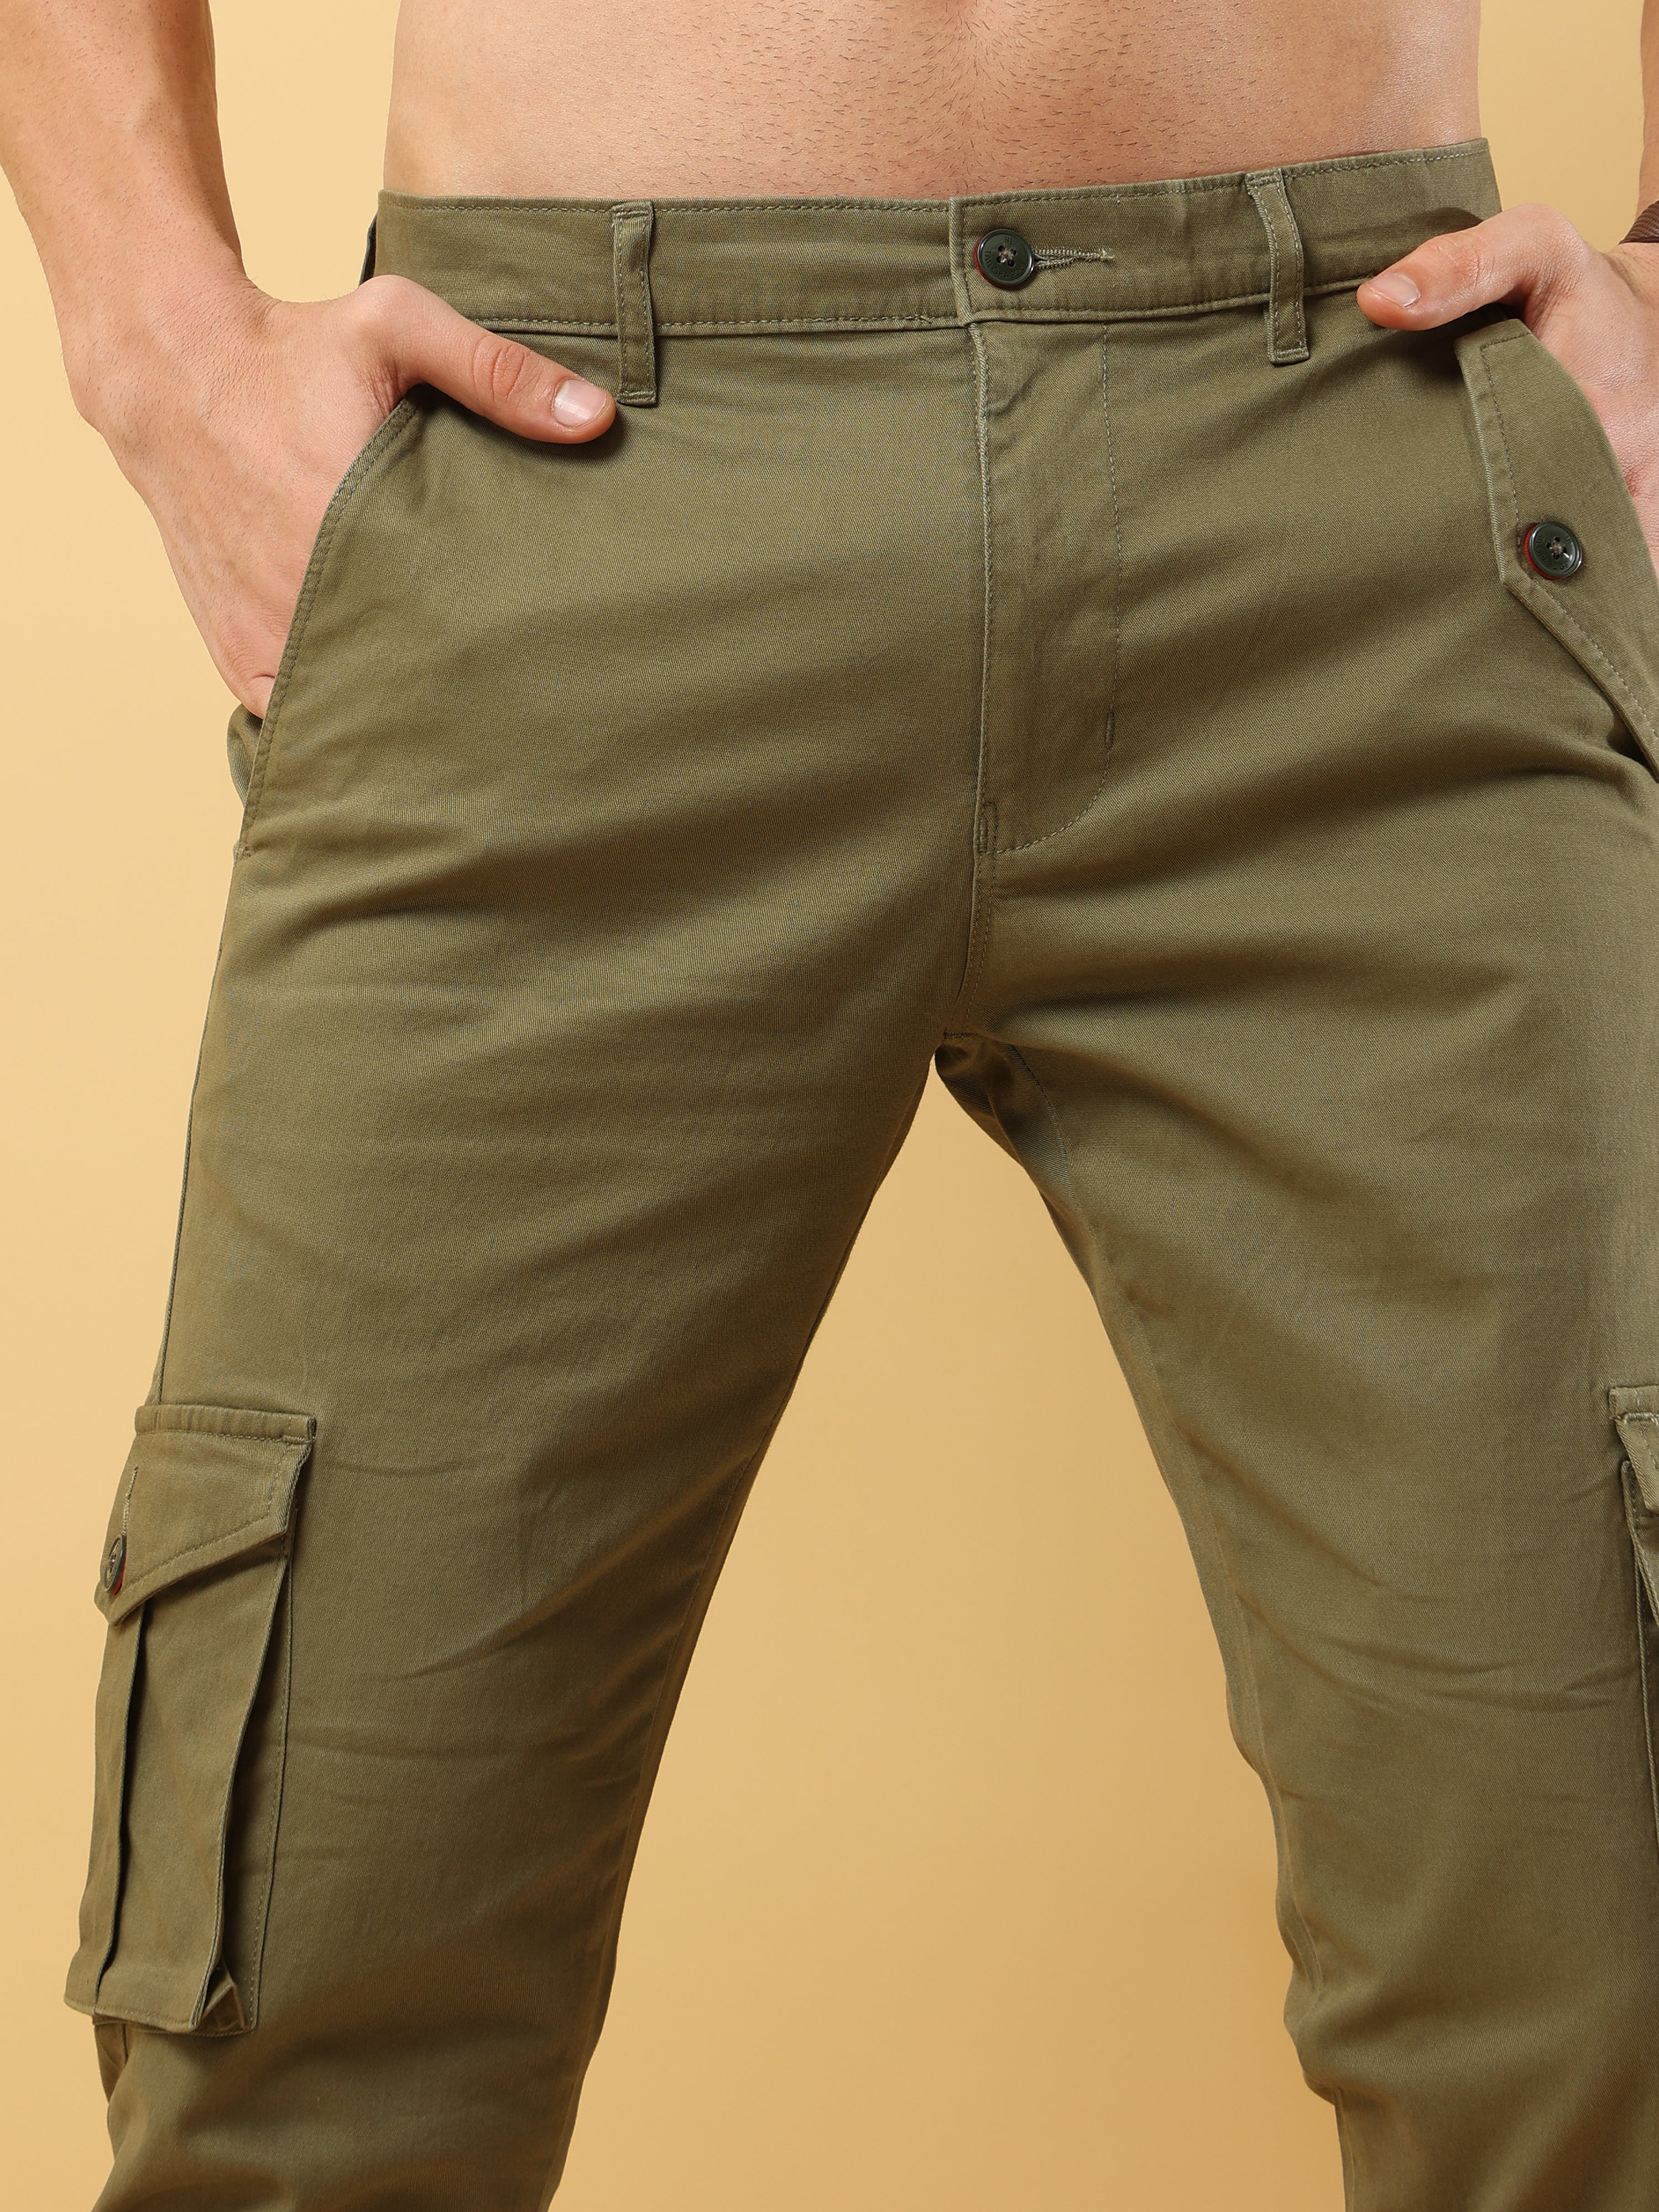 Olive Green Cargo Pants Men